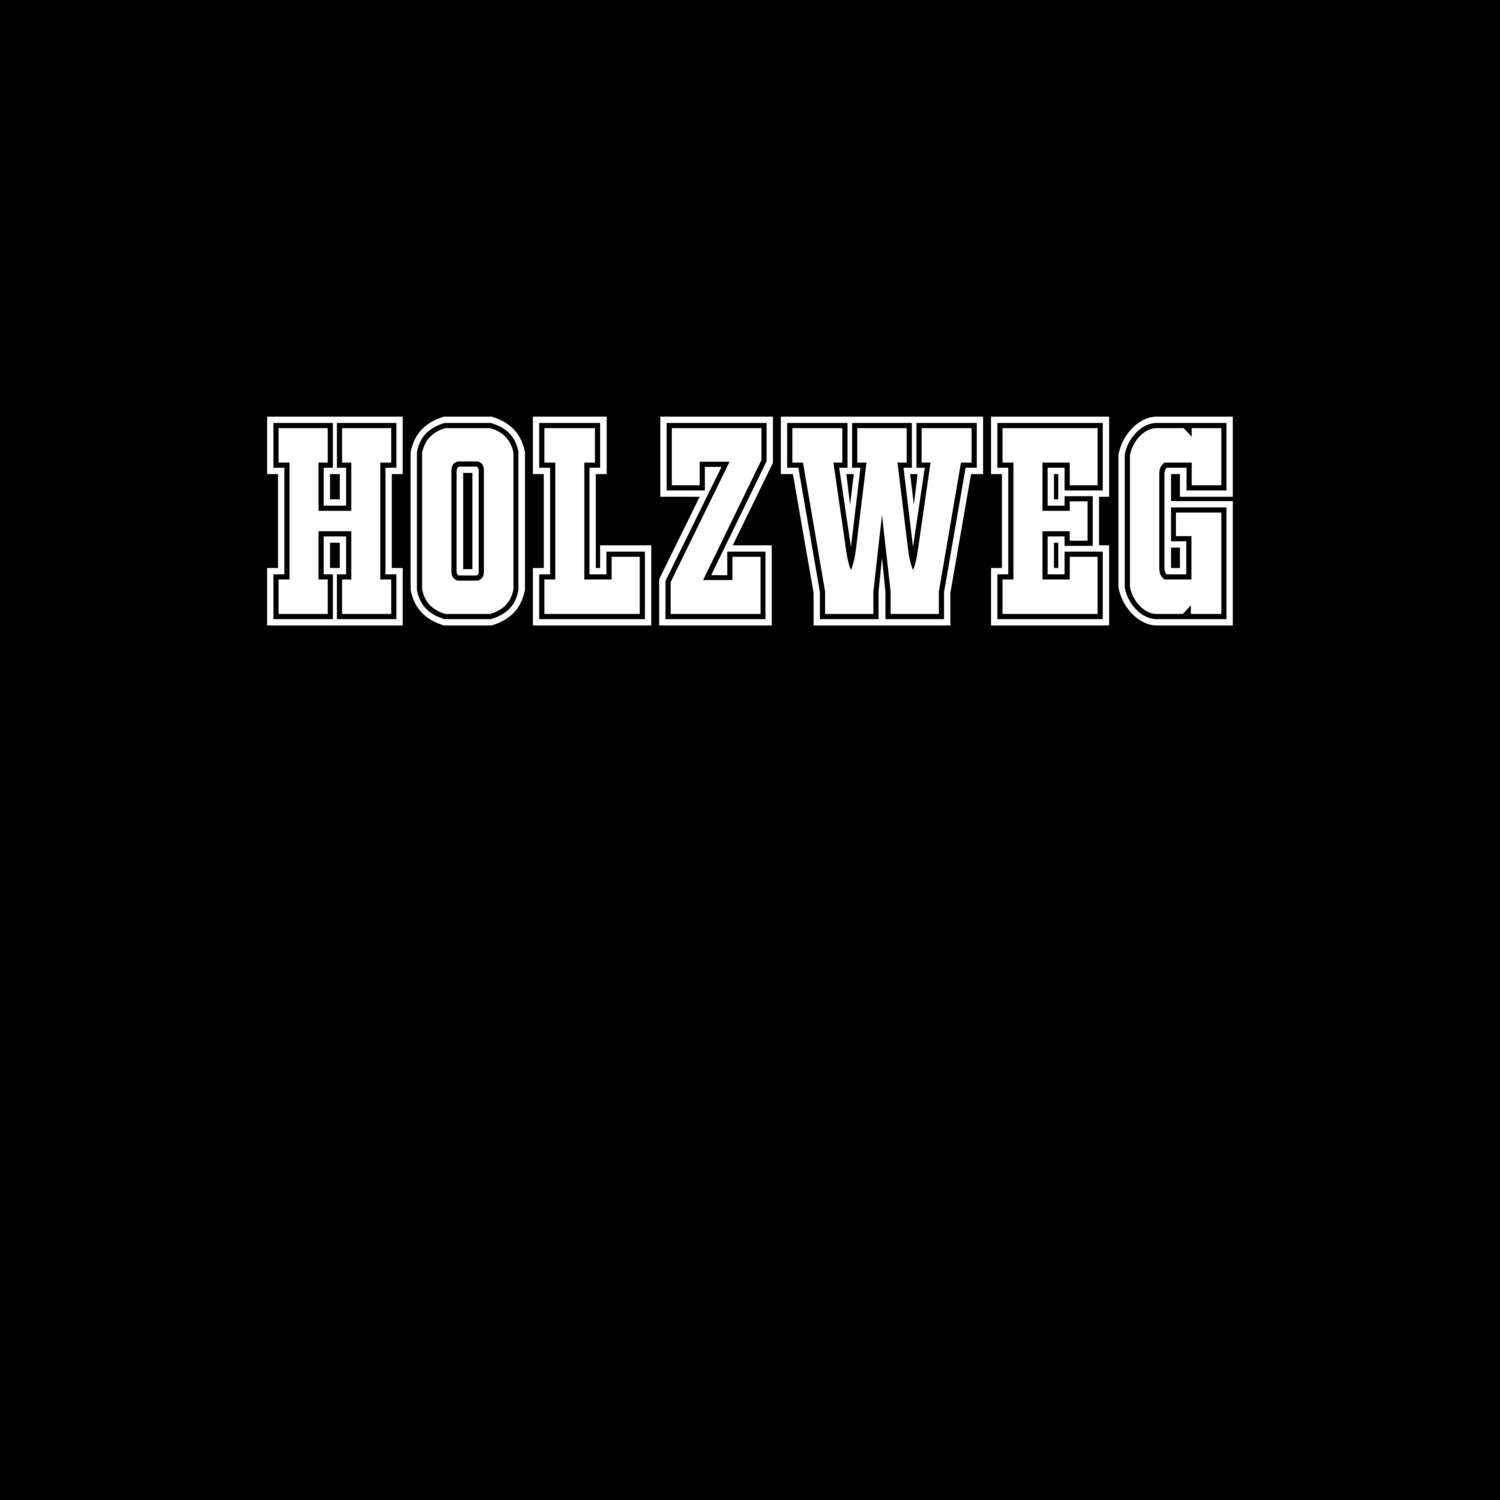 Holzweg T-Shirt »Classic«